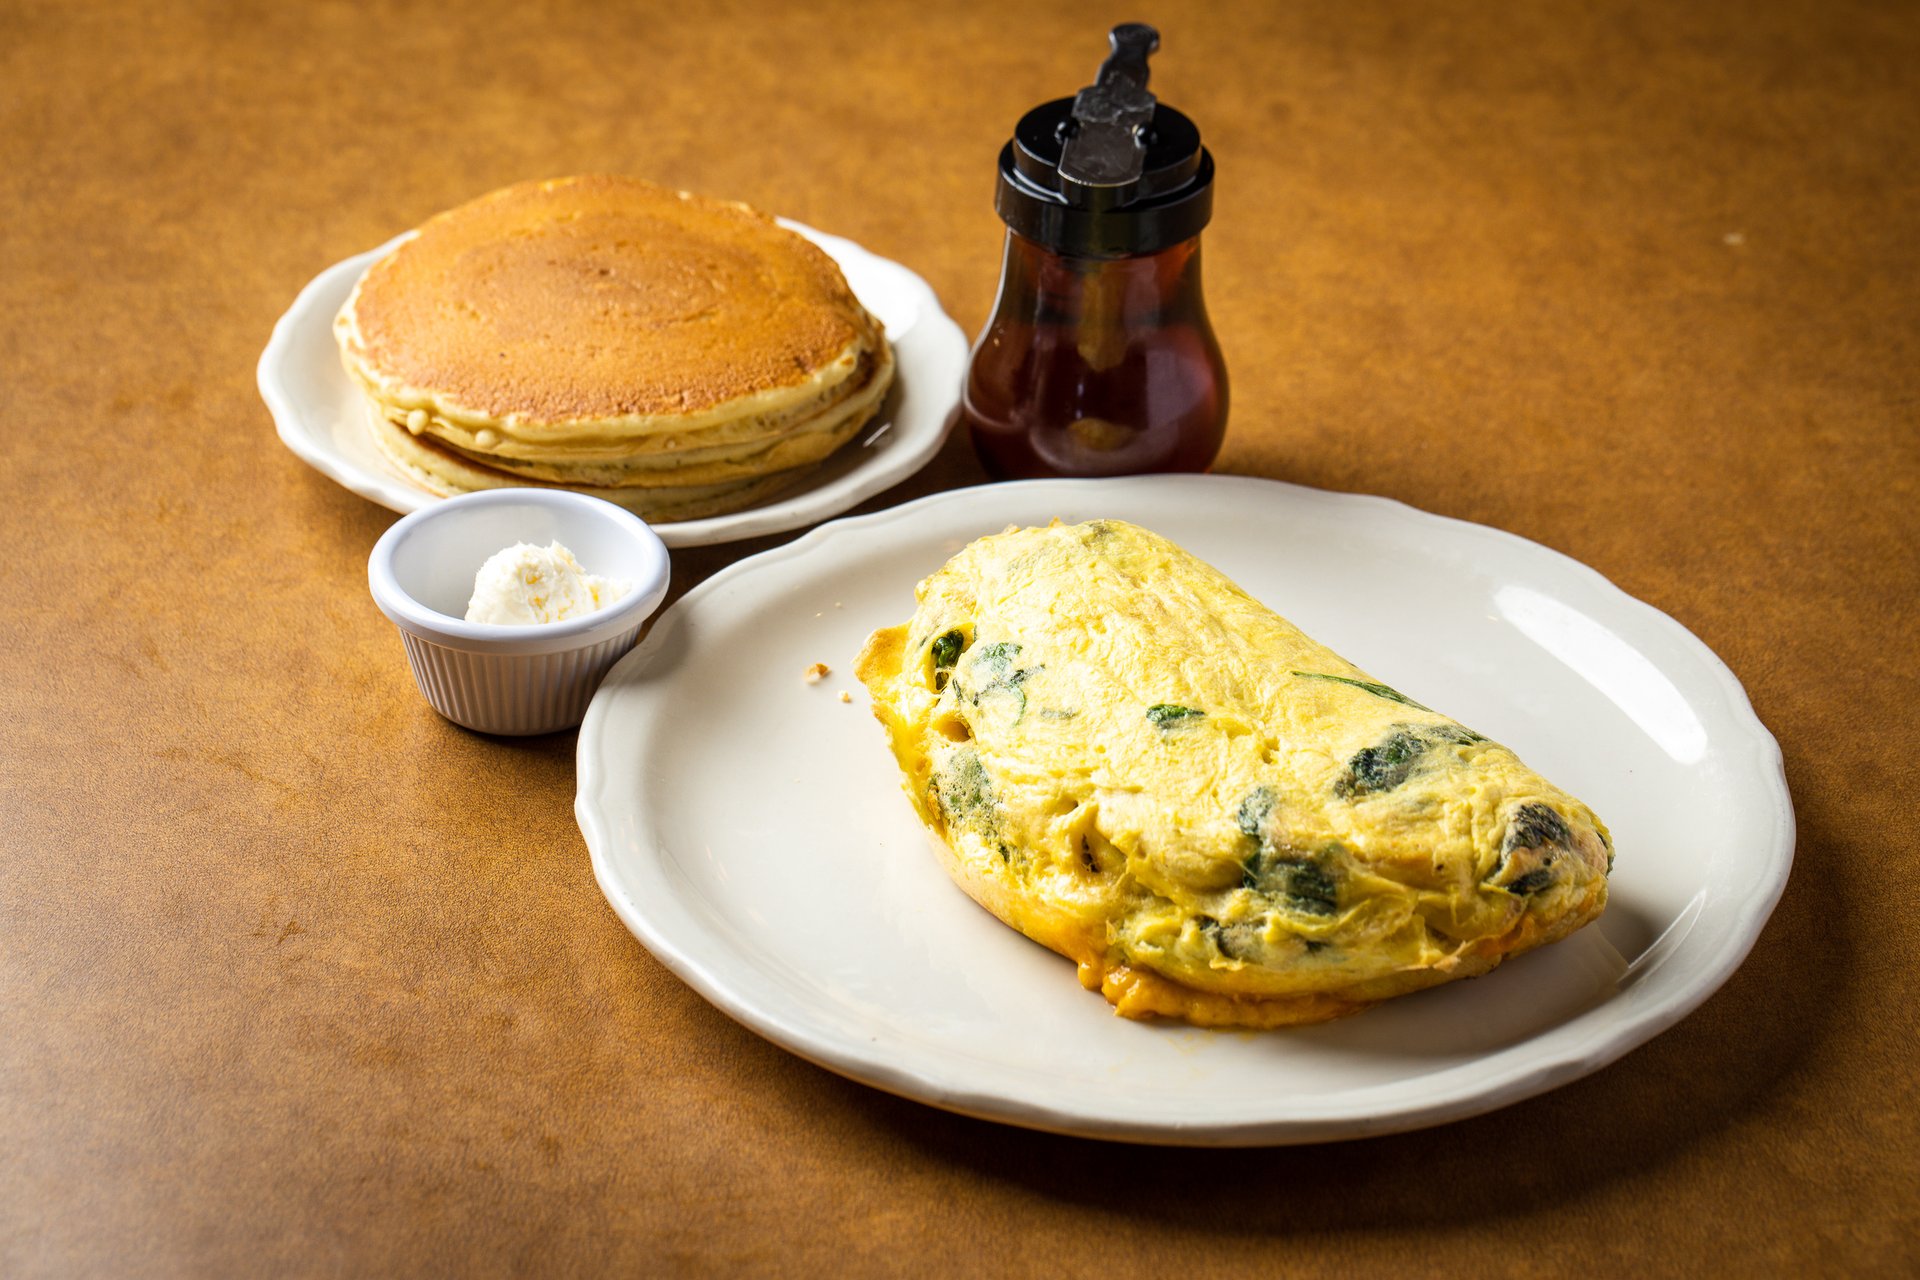 Omelet/Pancake Spatula - Moss & Embers Home Decorum